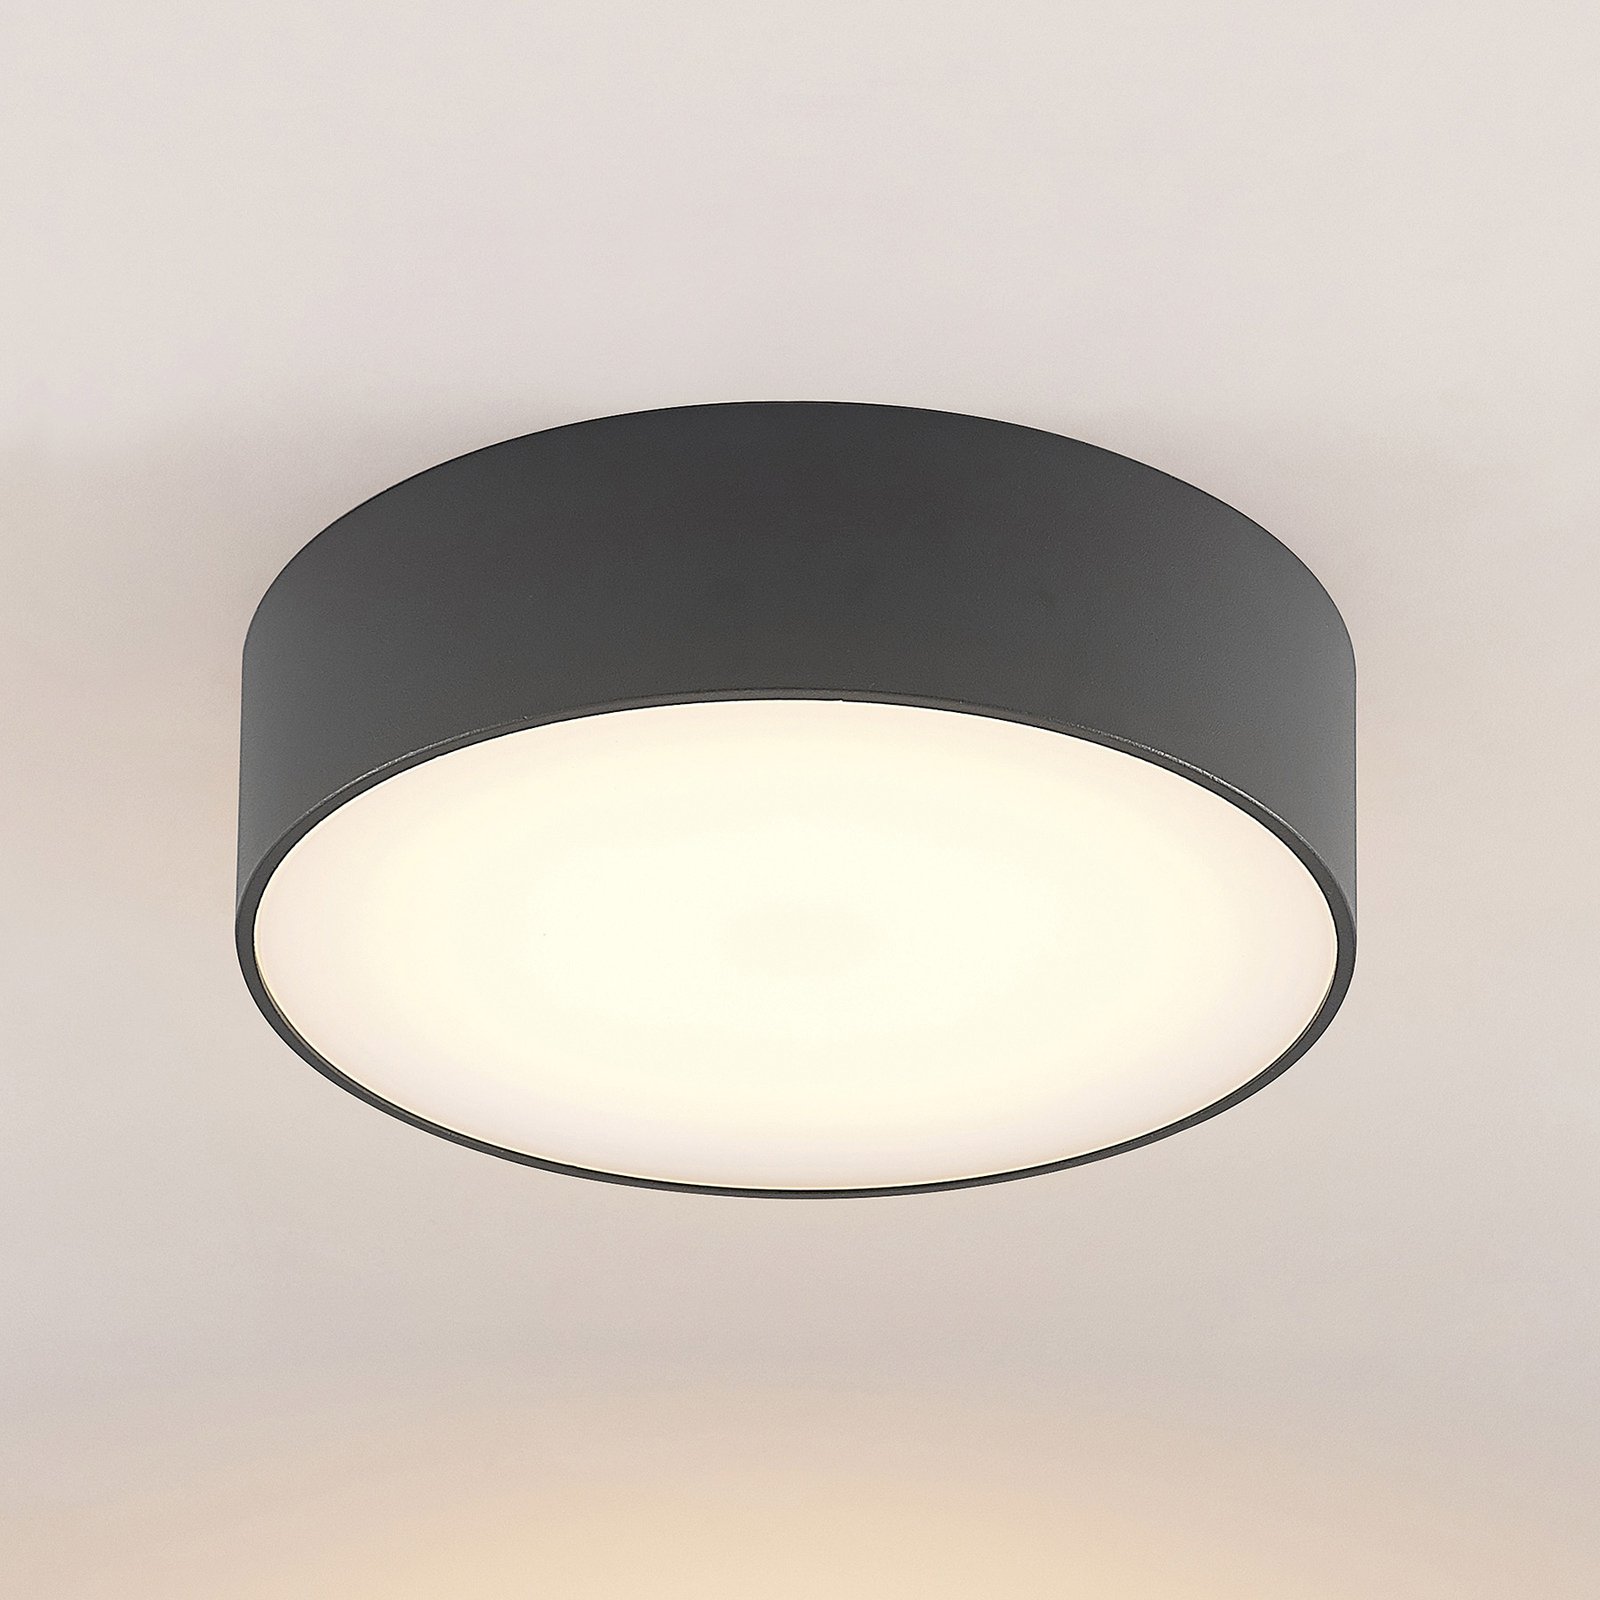 Arcchio Dakari lampa sufitowa zewnętrzna LED smart